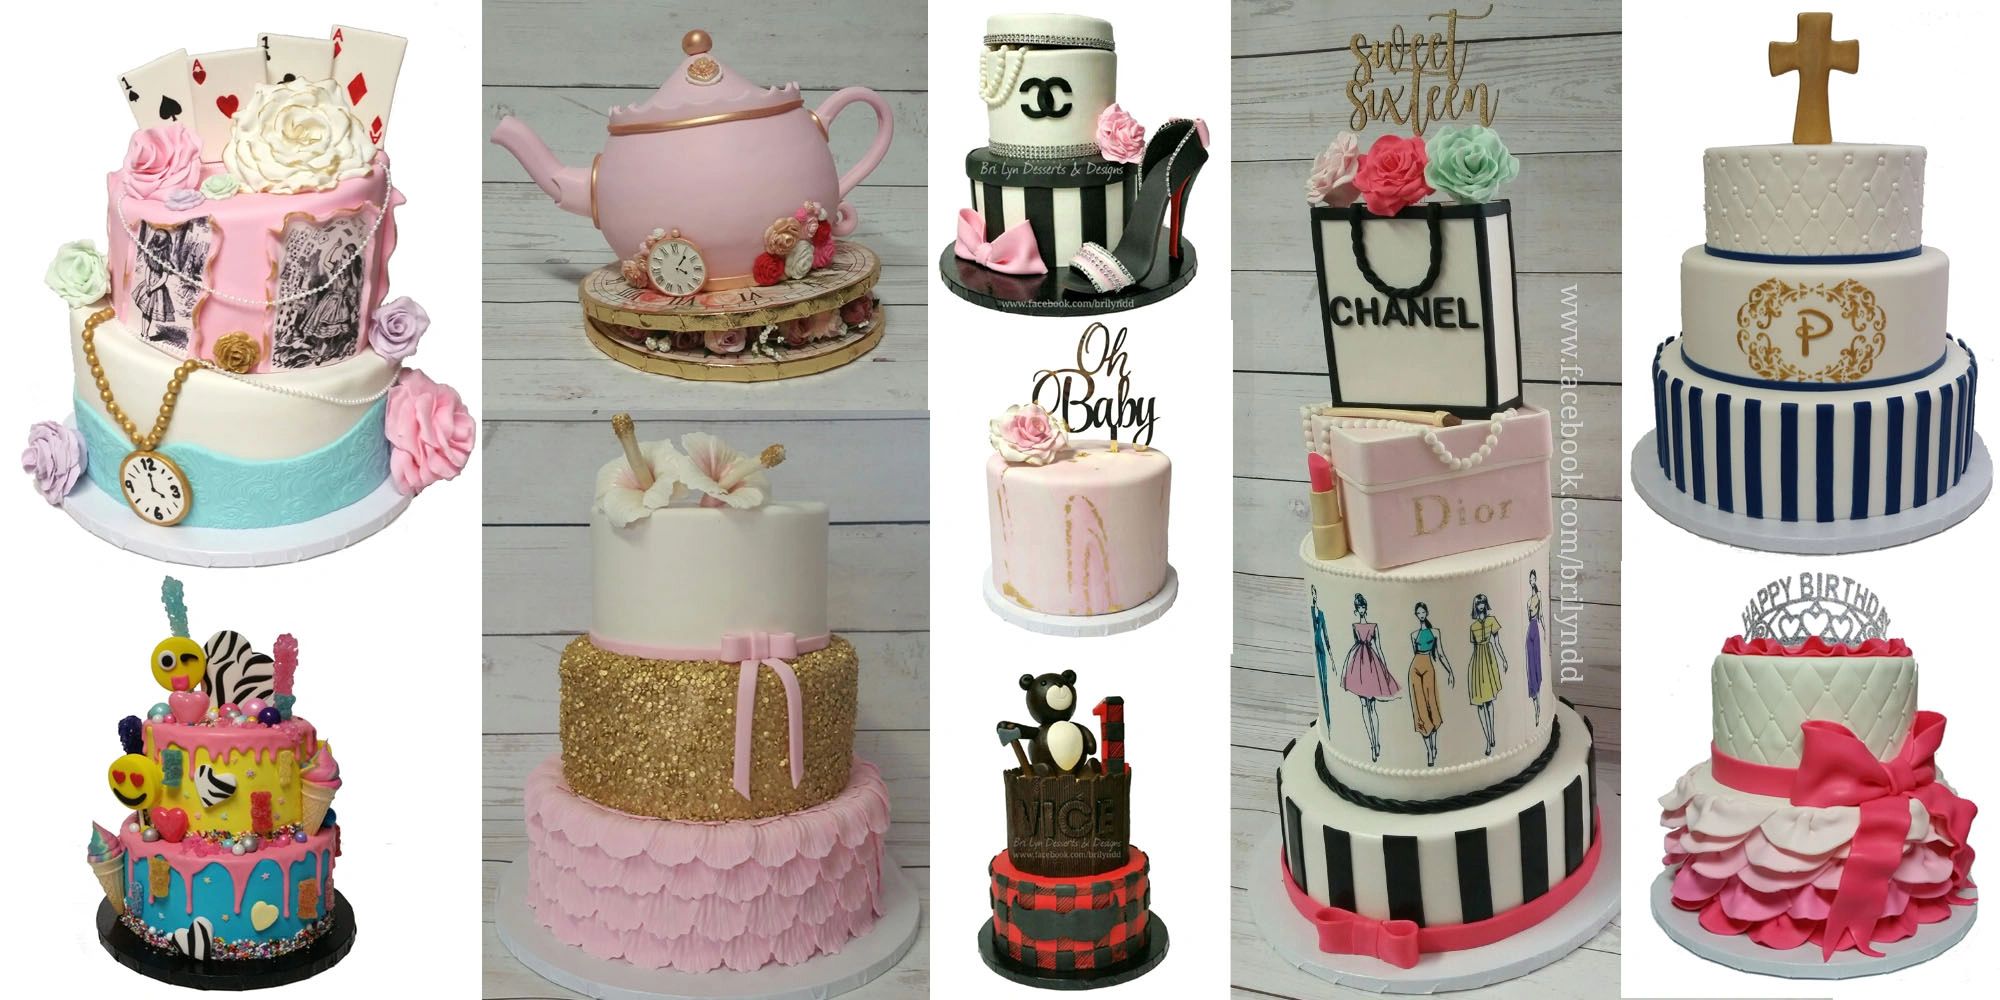 Bri Lyn Desserts & Designs - Custom Cakes, Bakery